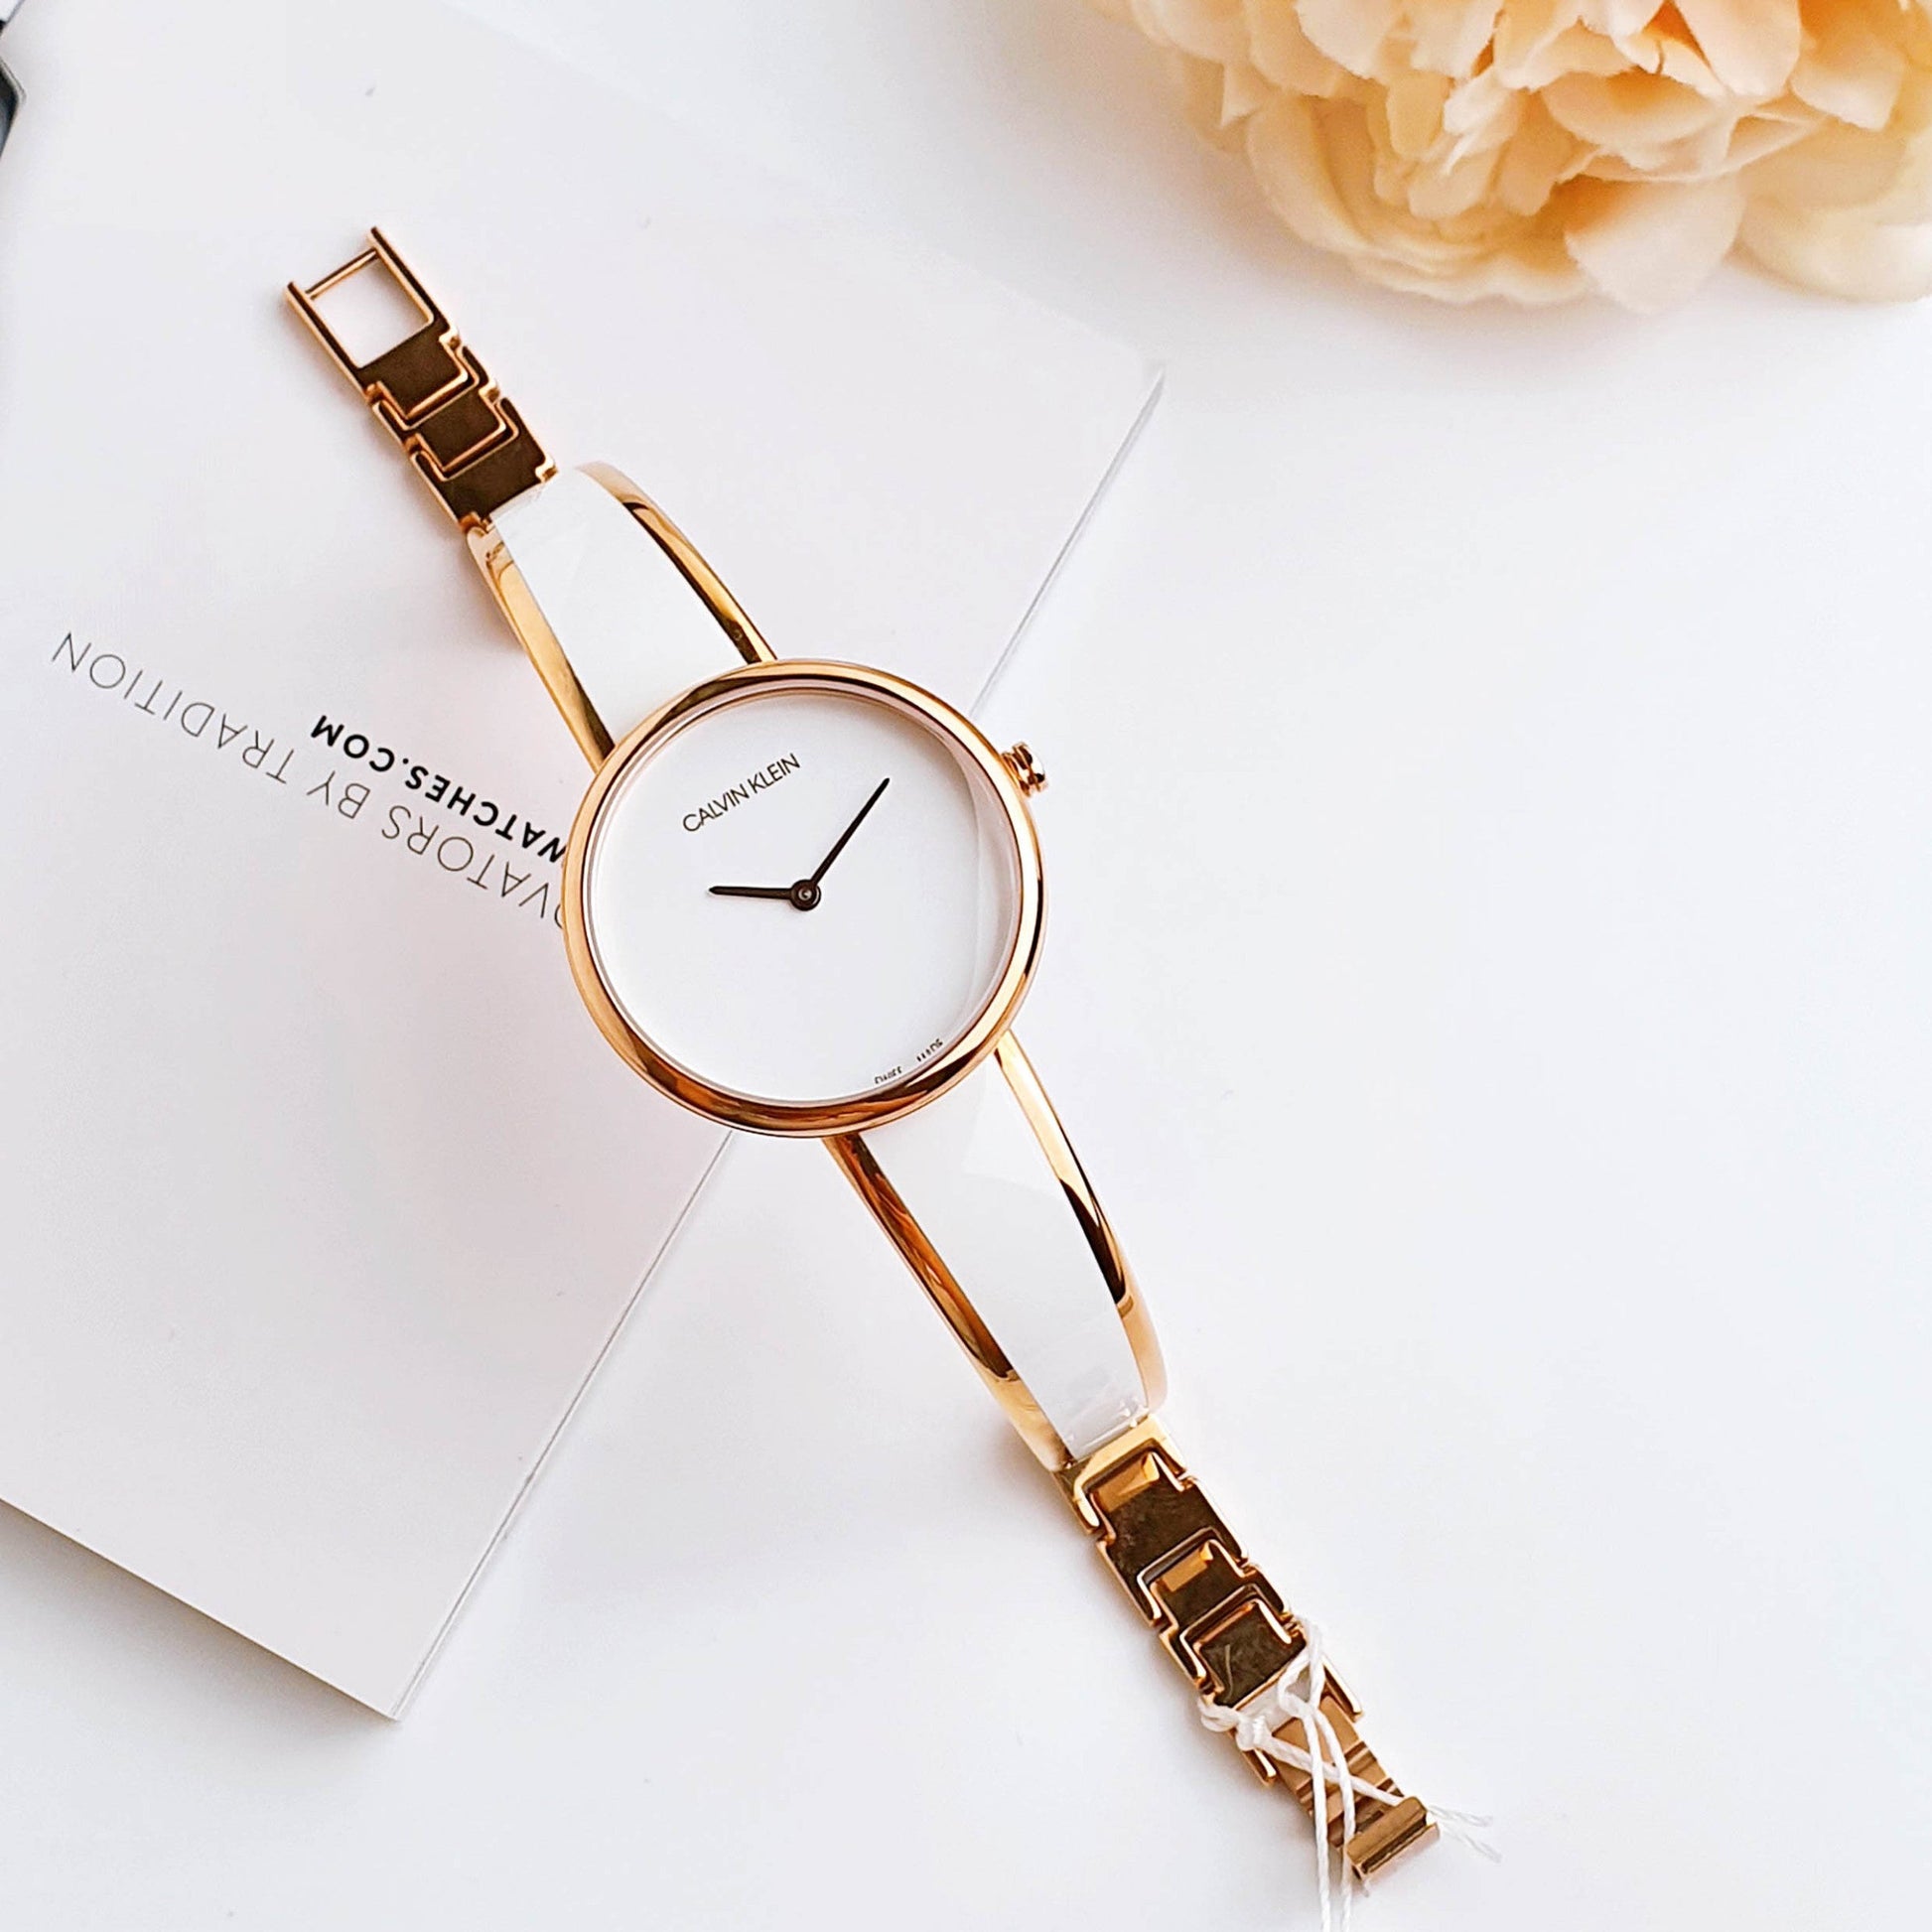 Calvin Klein Seduce White Dial Two Tone Steel Strap Watch for Women - K4E2N616